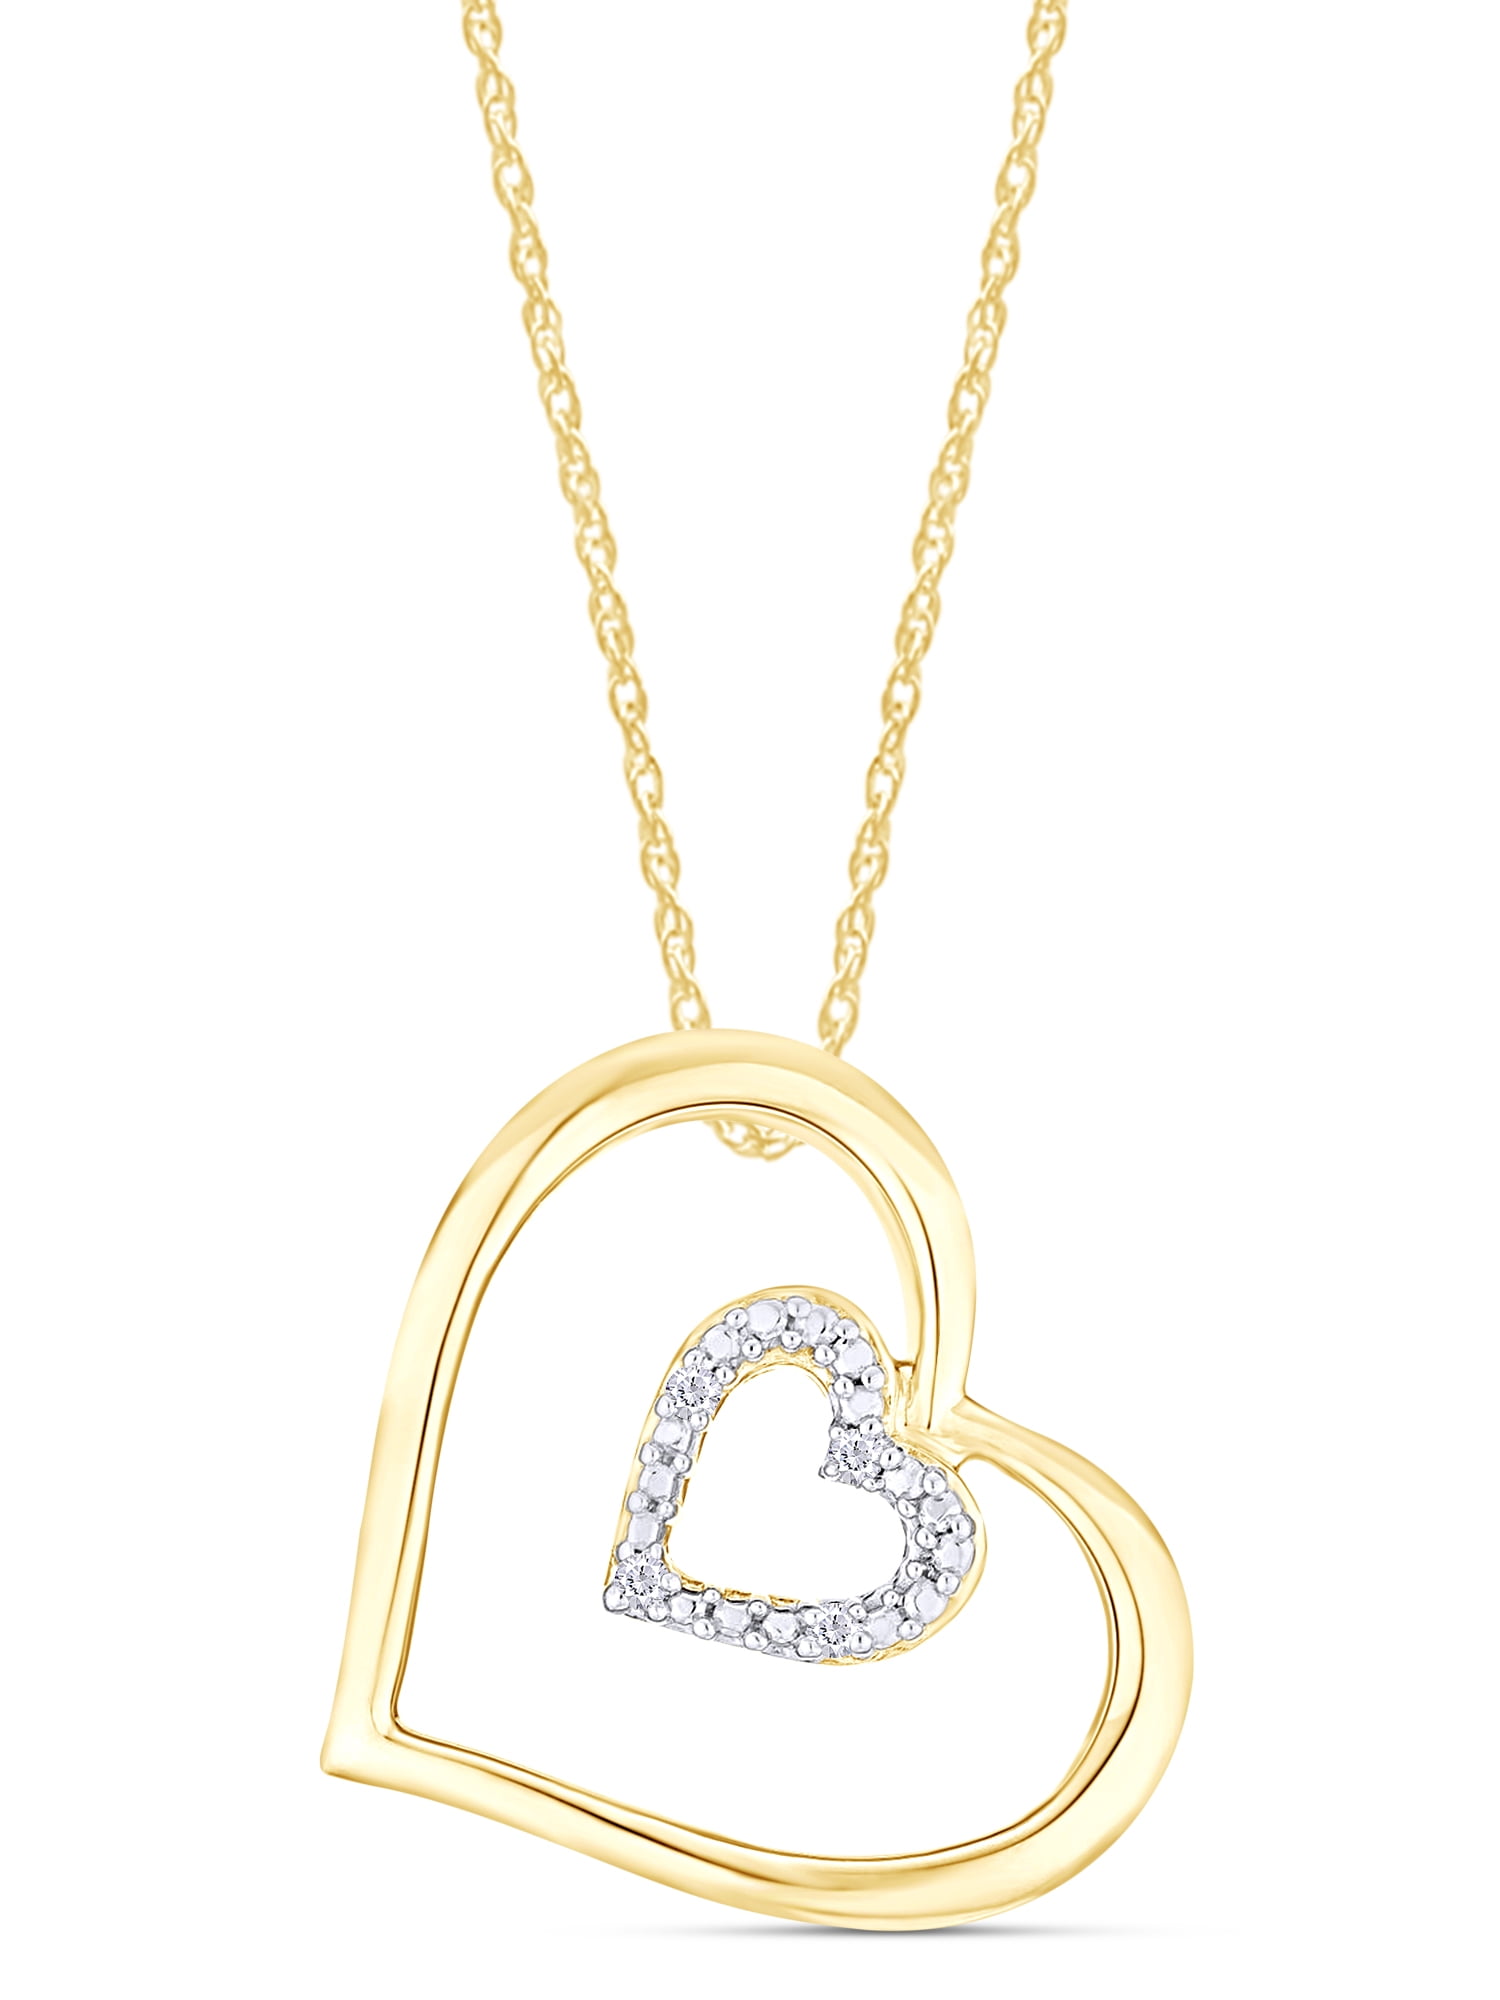 Wishrocks Dog Heart Pendant Necklace in 14K Gold Over Sterling Silver 